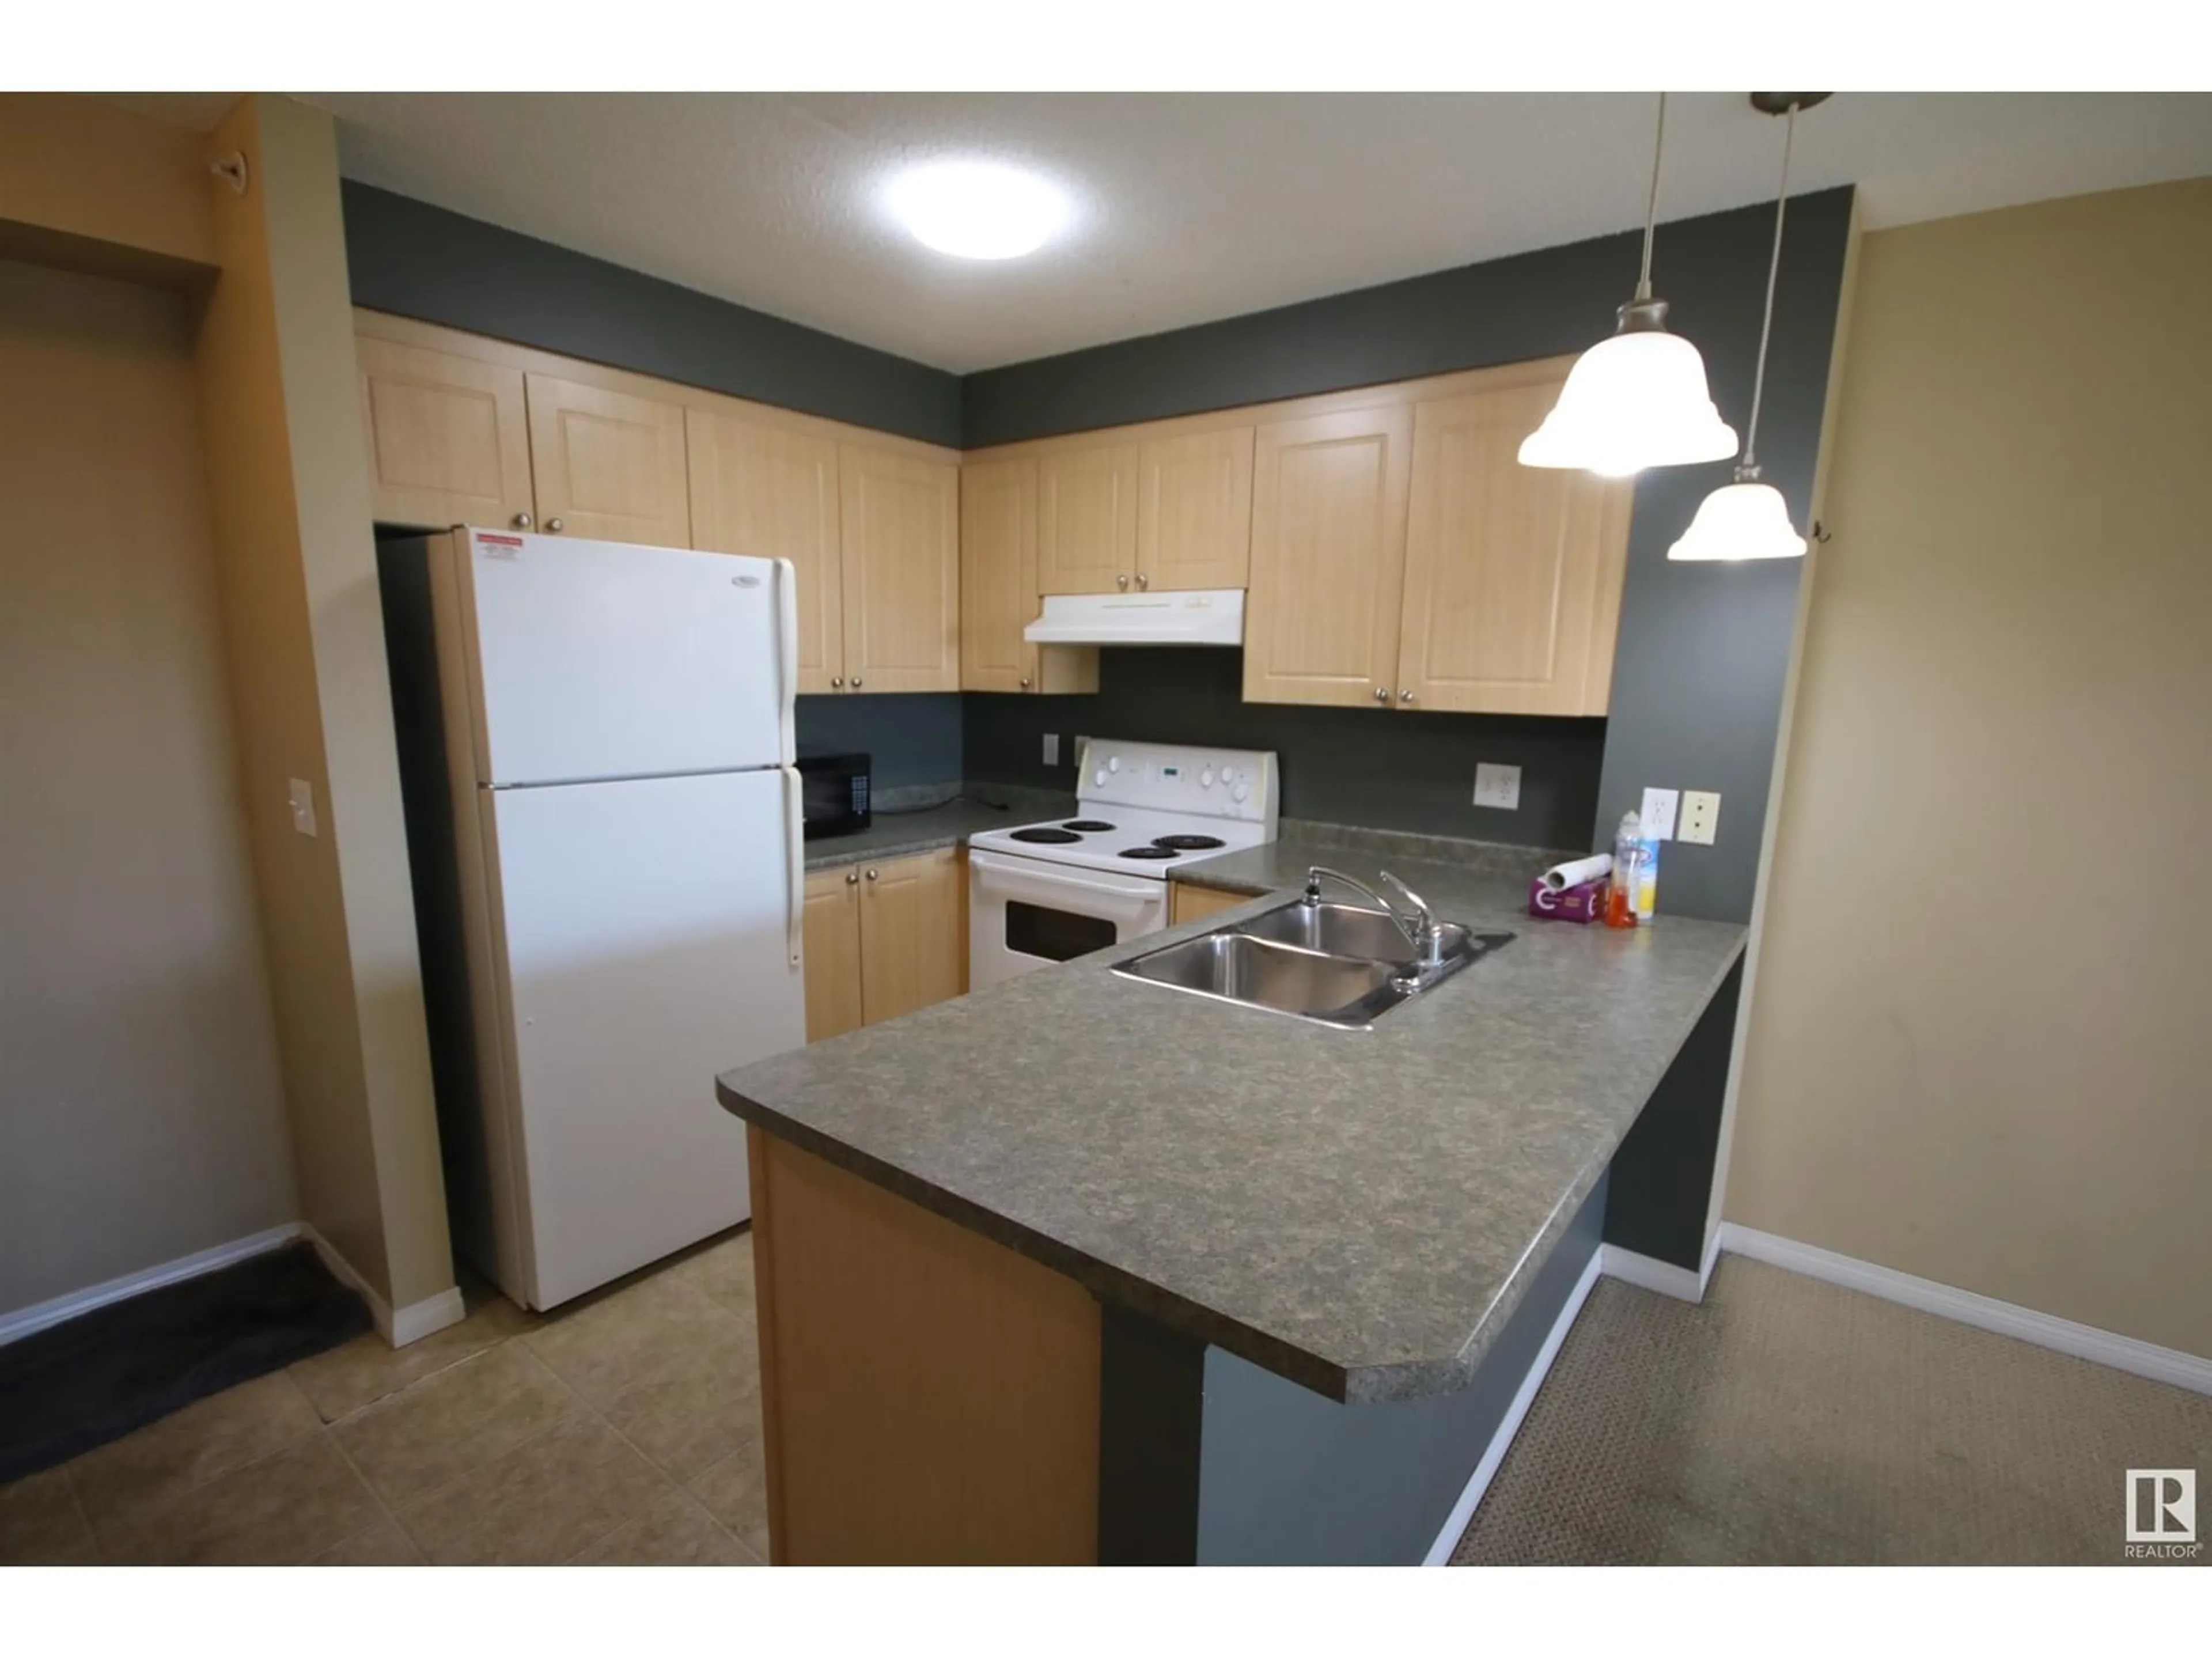 Standard kitchen for #410 636 MCALLISTER LO SW, Edmonton Alberta T6W1N4